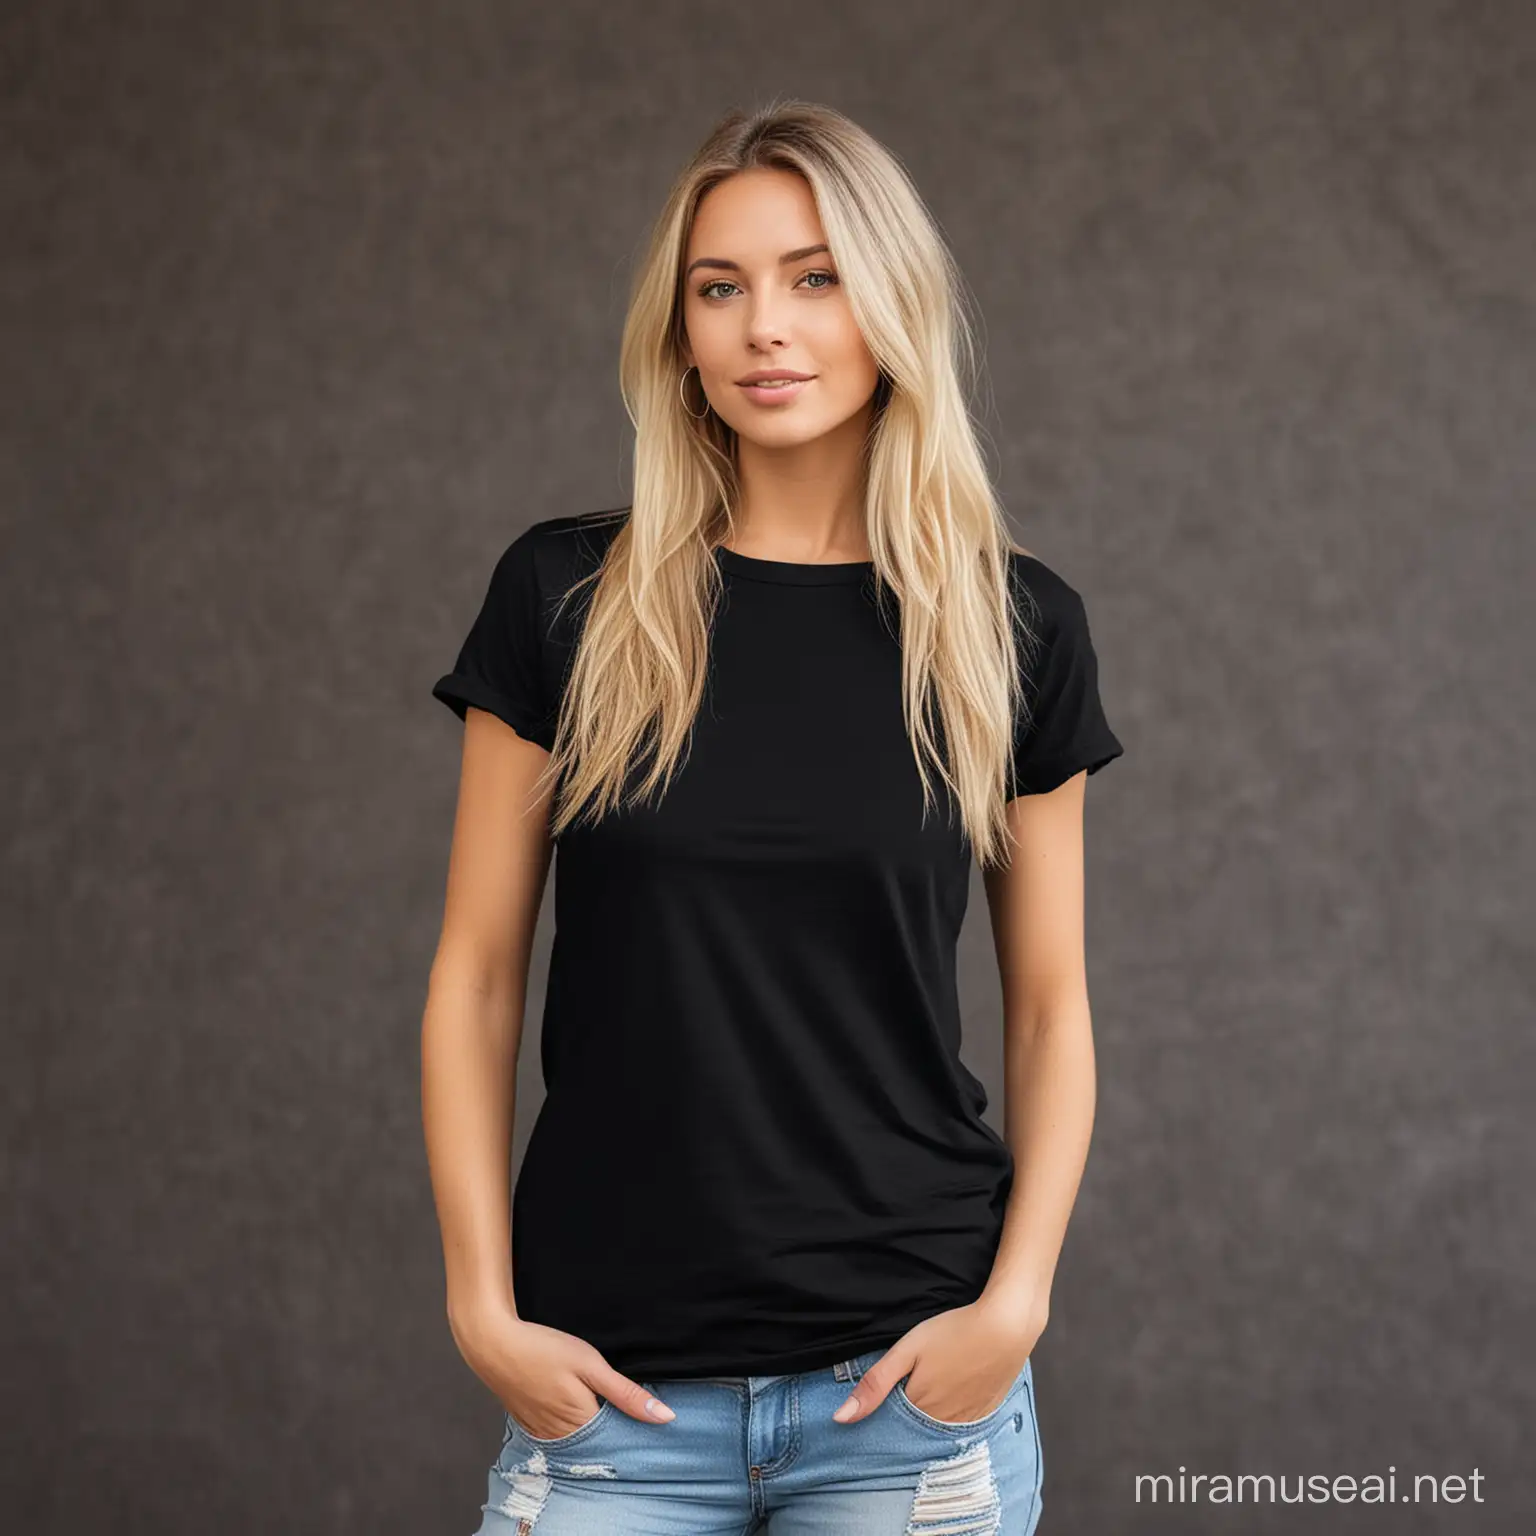 Blonde Woman Wearing Black TShirt Mockup Against Simple Boho Wall Background